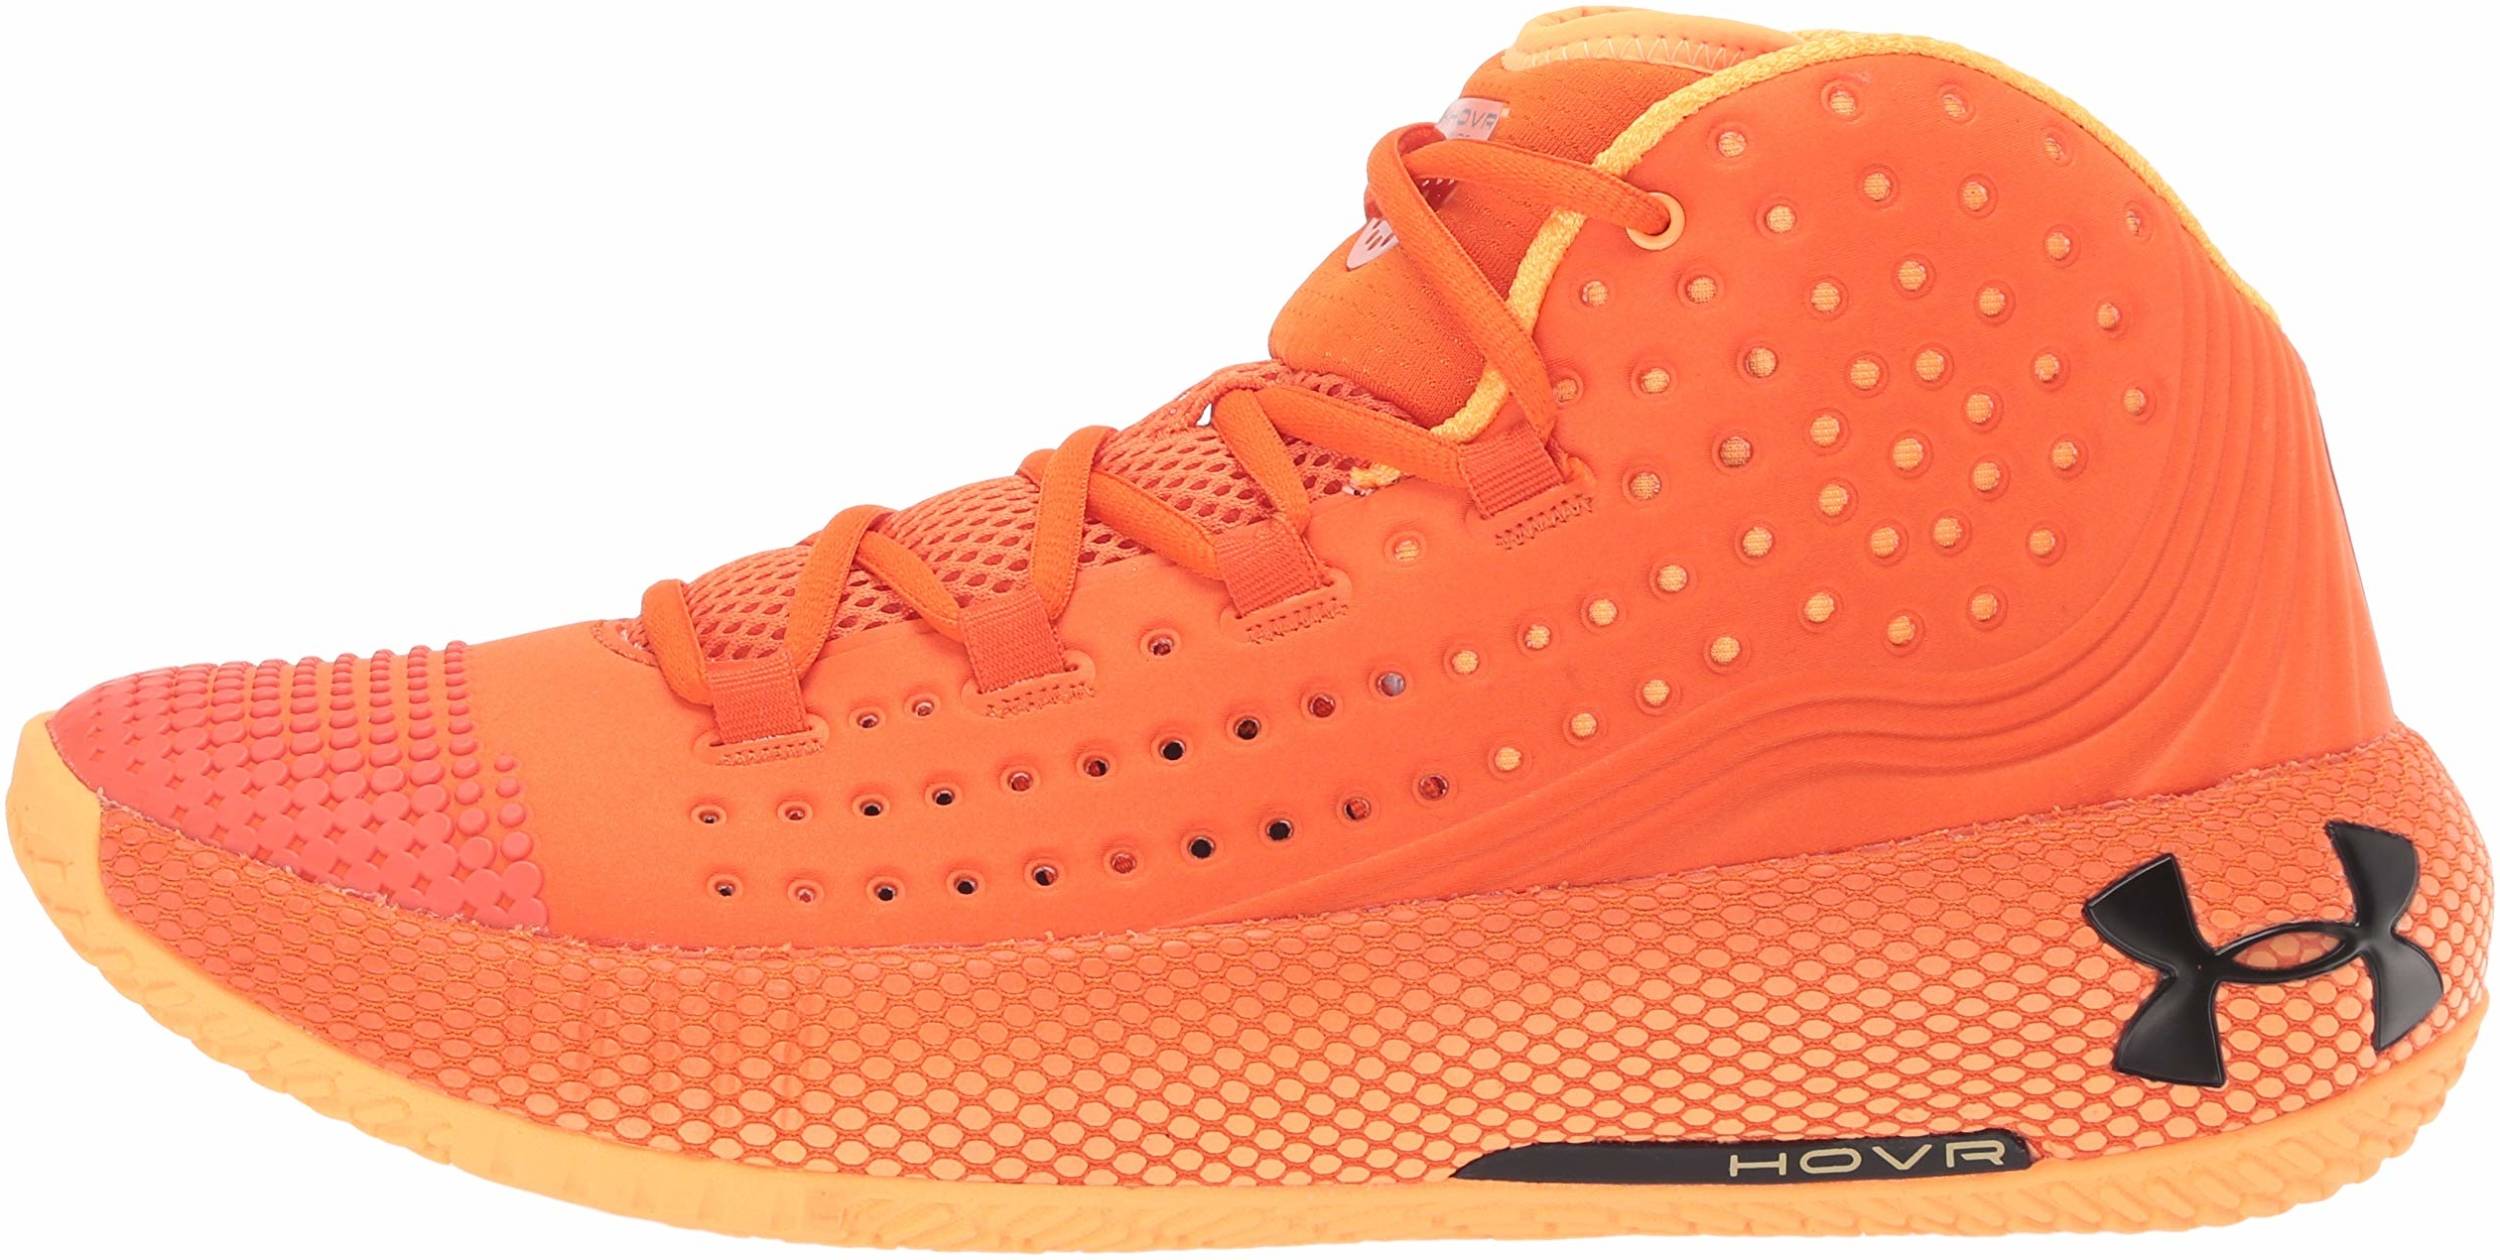 Save 44% on Orange Basketball Shoes (34 